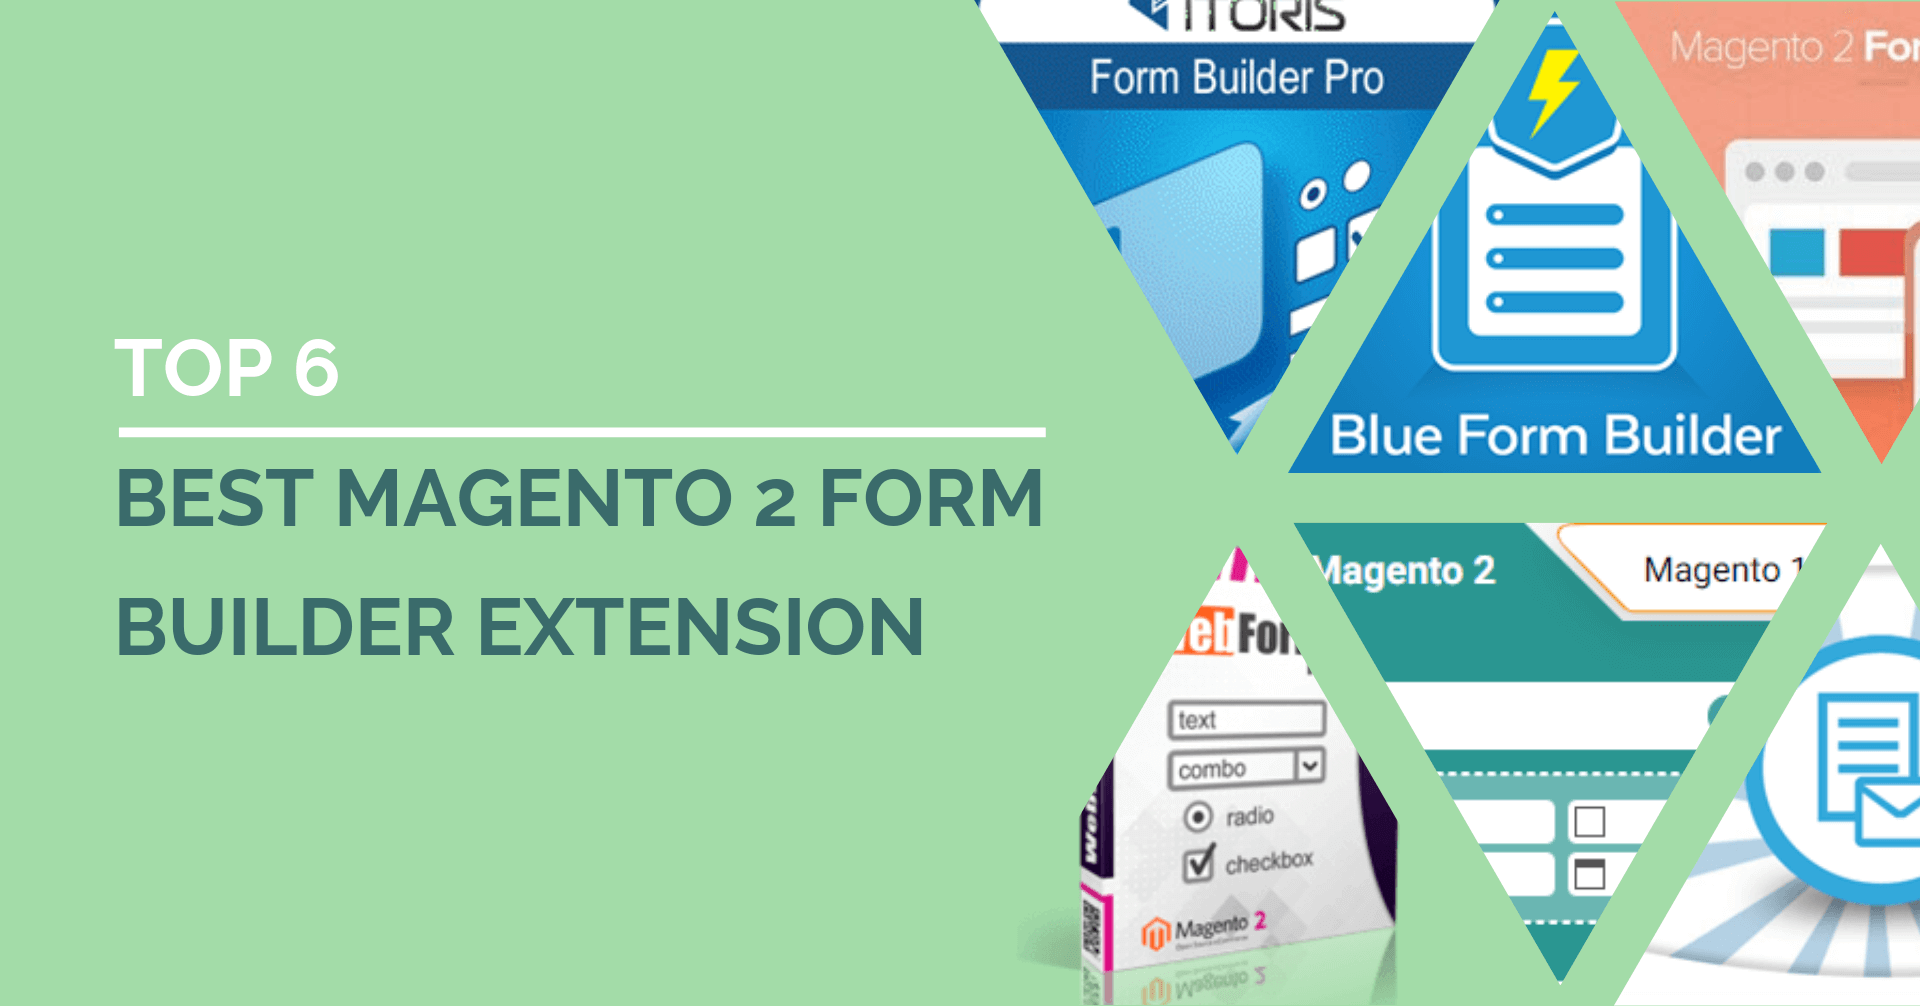 Top 6 Best Magento 2 Form Builder Extension 2019